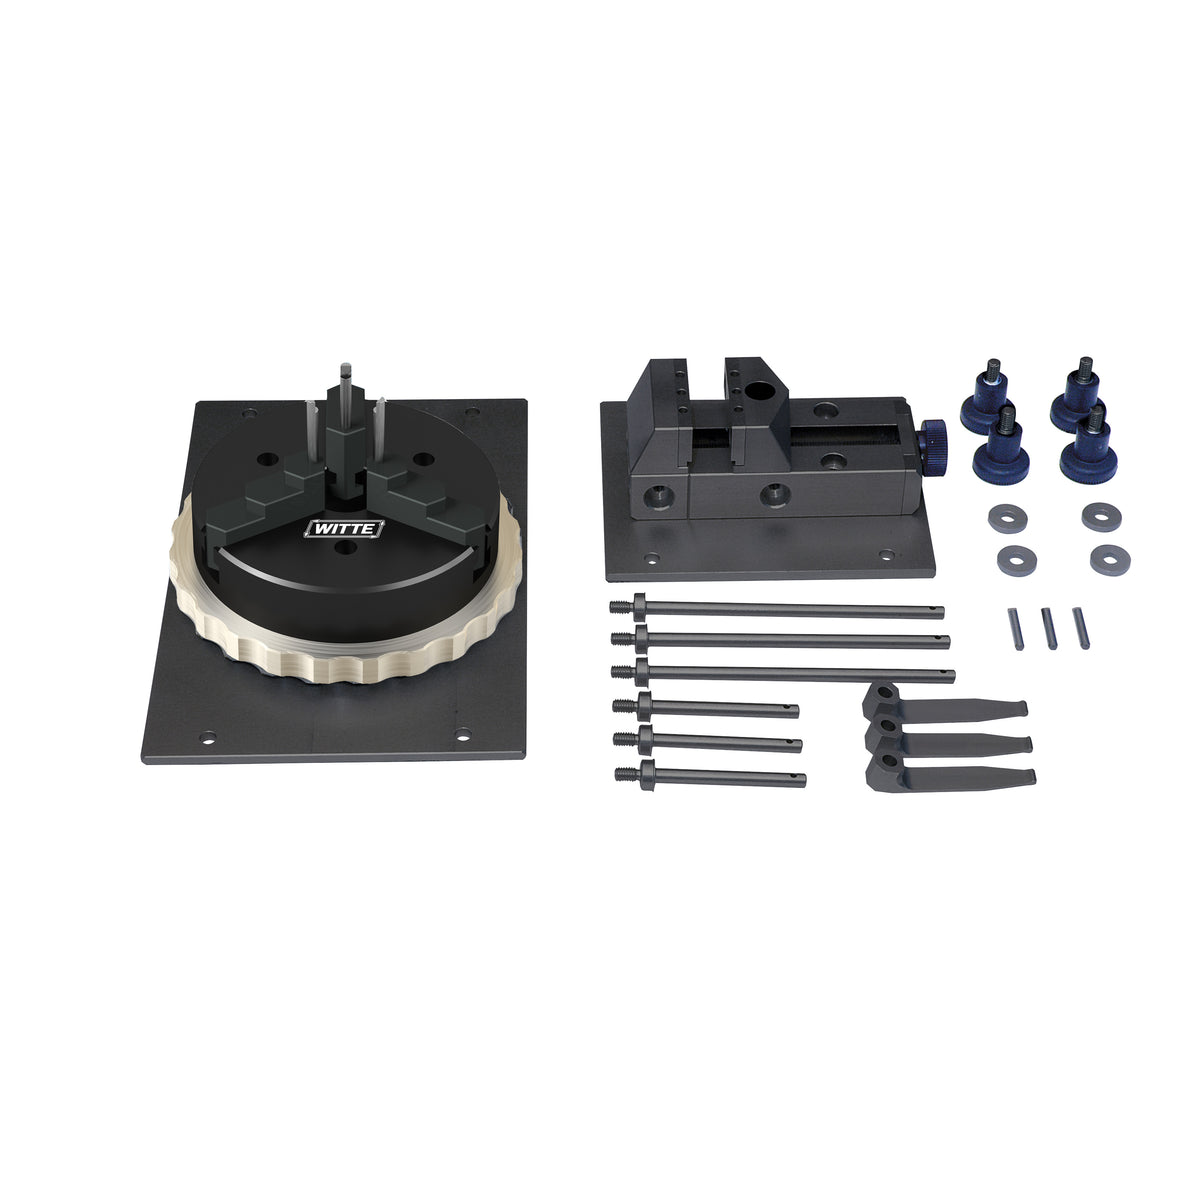 CMM Fixture Starter Kit G Basic Set Clamping accessory kit